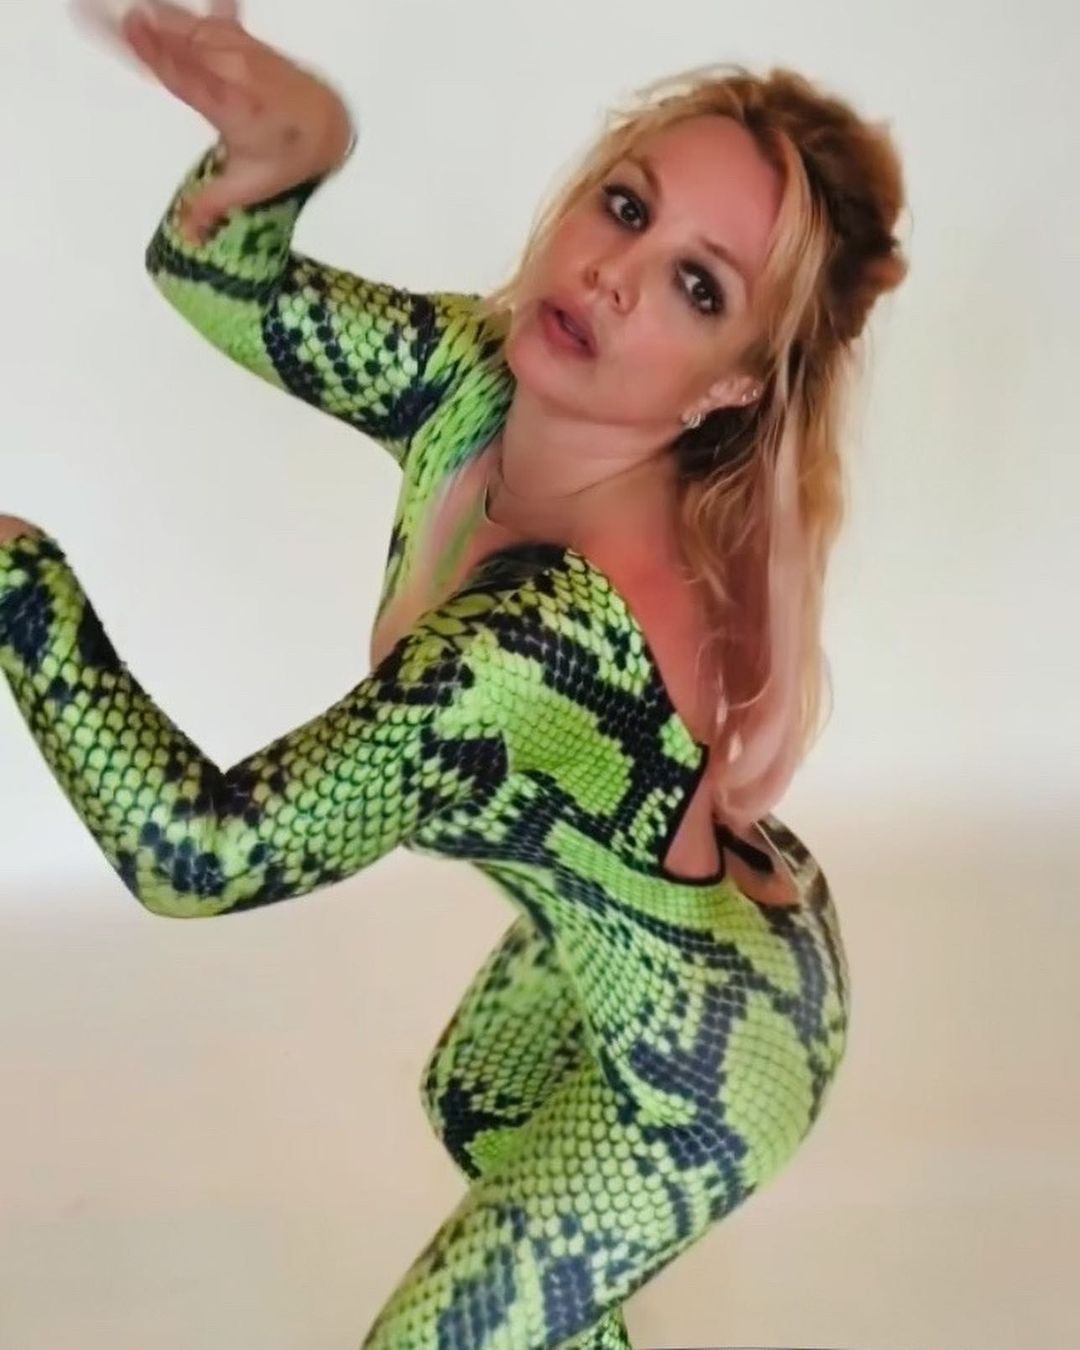 Britney Spears in snakeskin catsuit